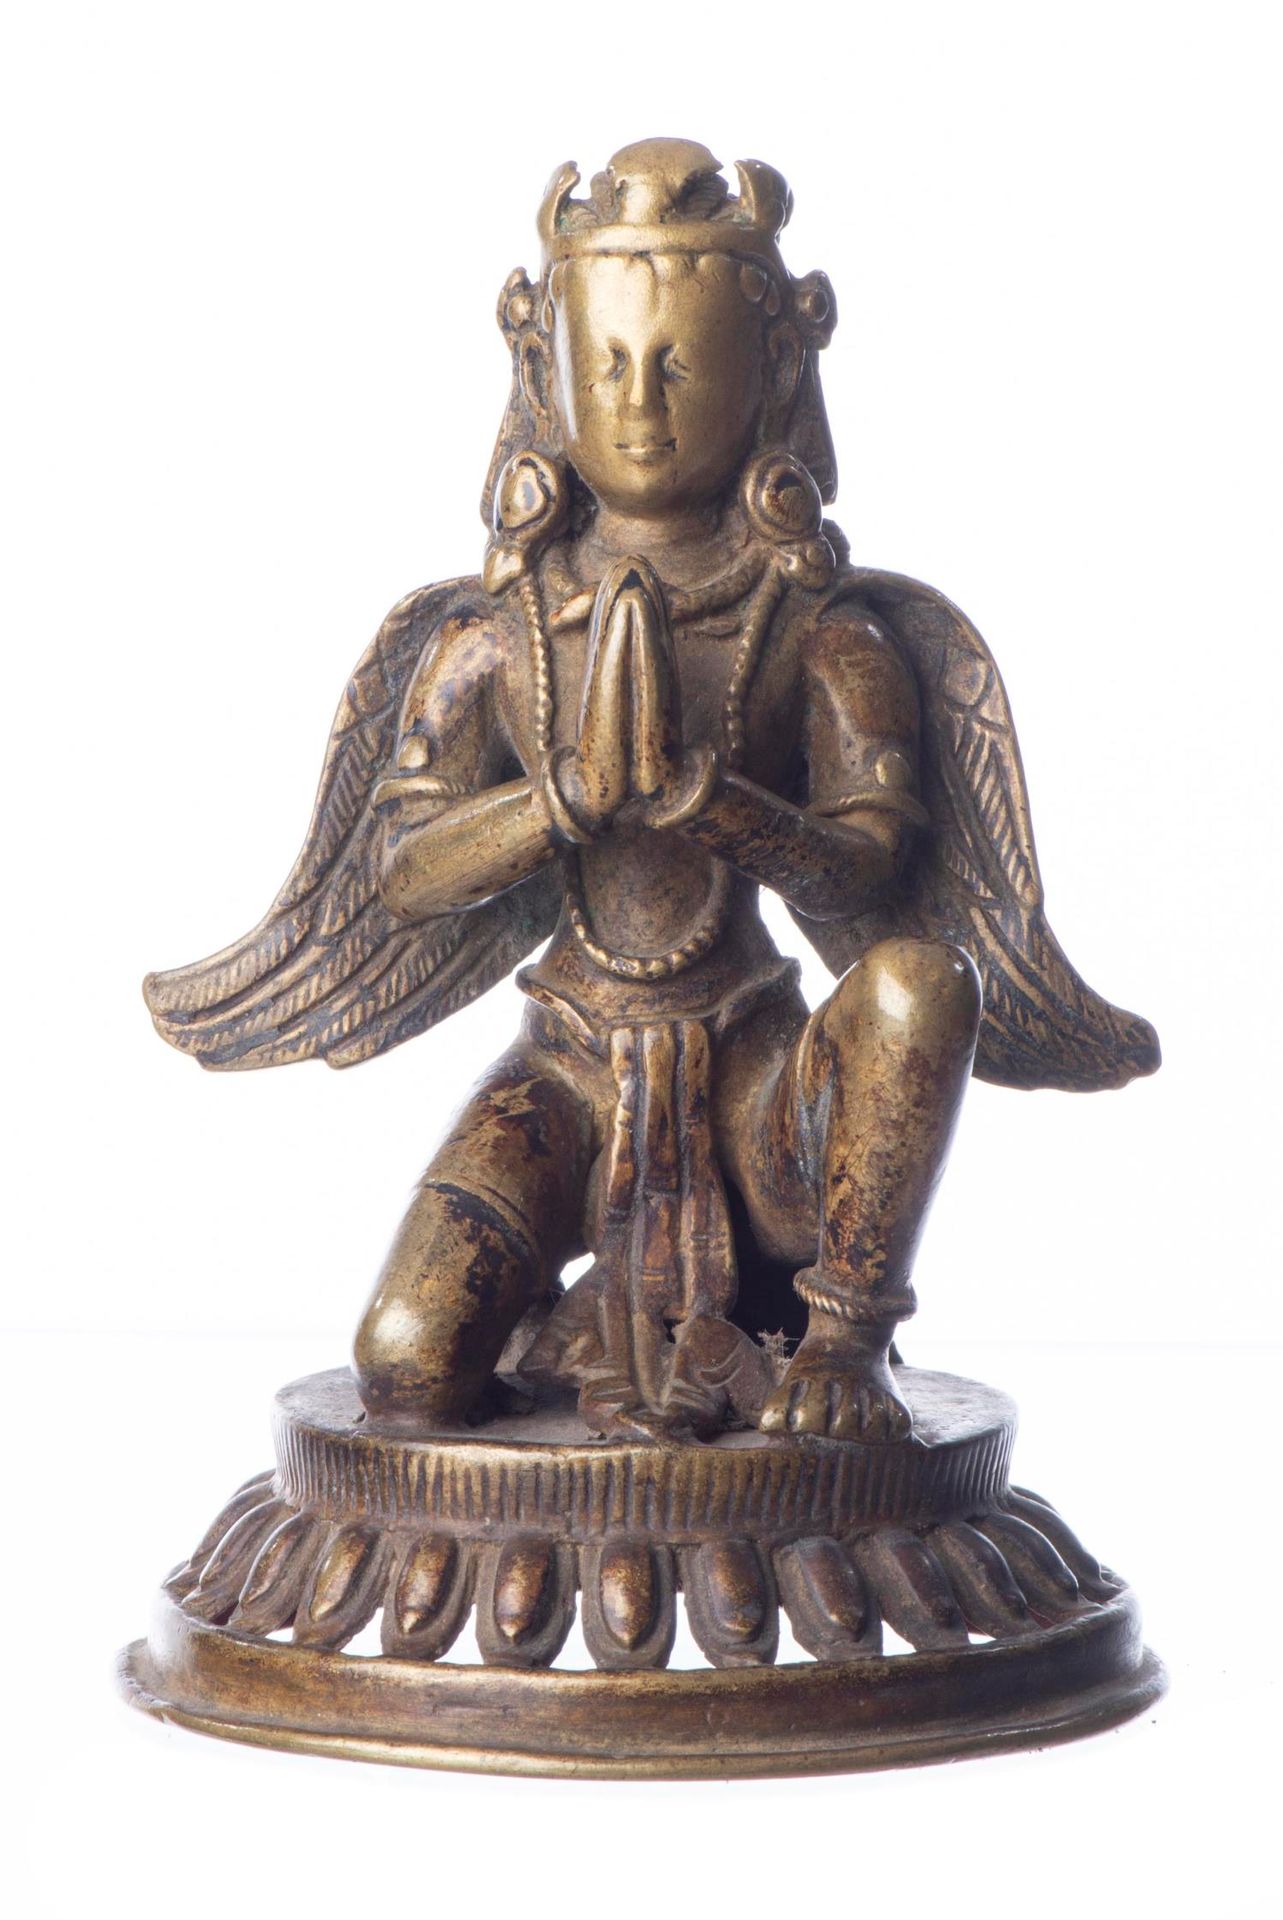 Null 跪在圆形莲花状底座上的黄色铜制有翼佛或迦楼罗的化身。

14世纪

H.11厘米

出处：
来自日内瓦的旧私人收藏，1971/72年在尼泊尔购买。